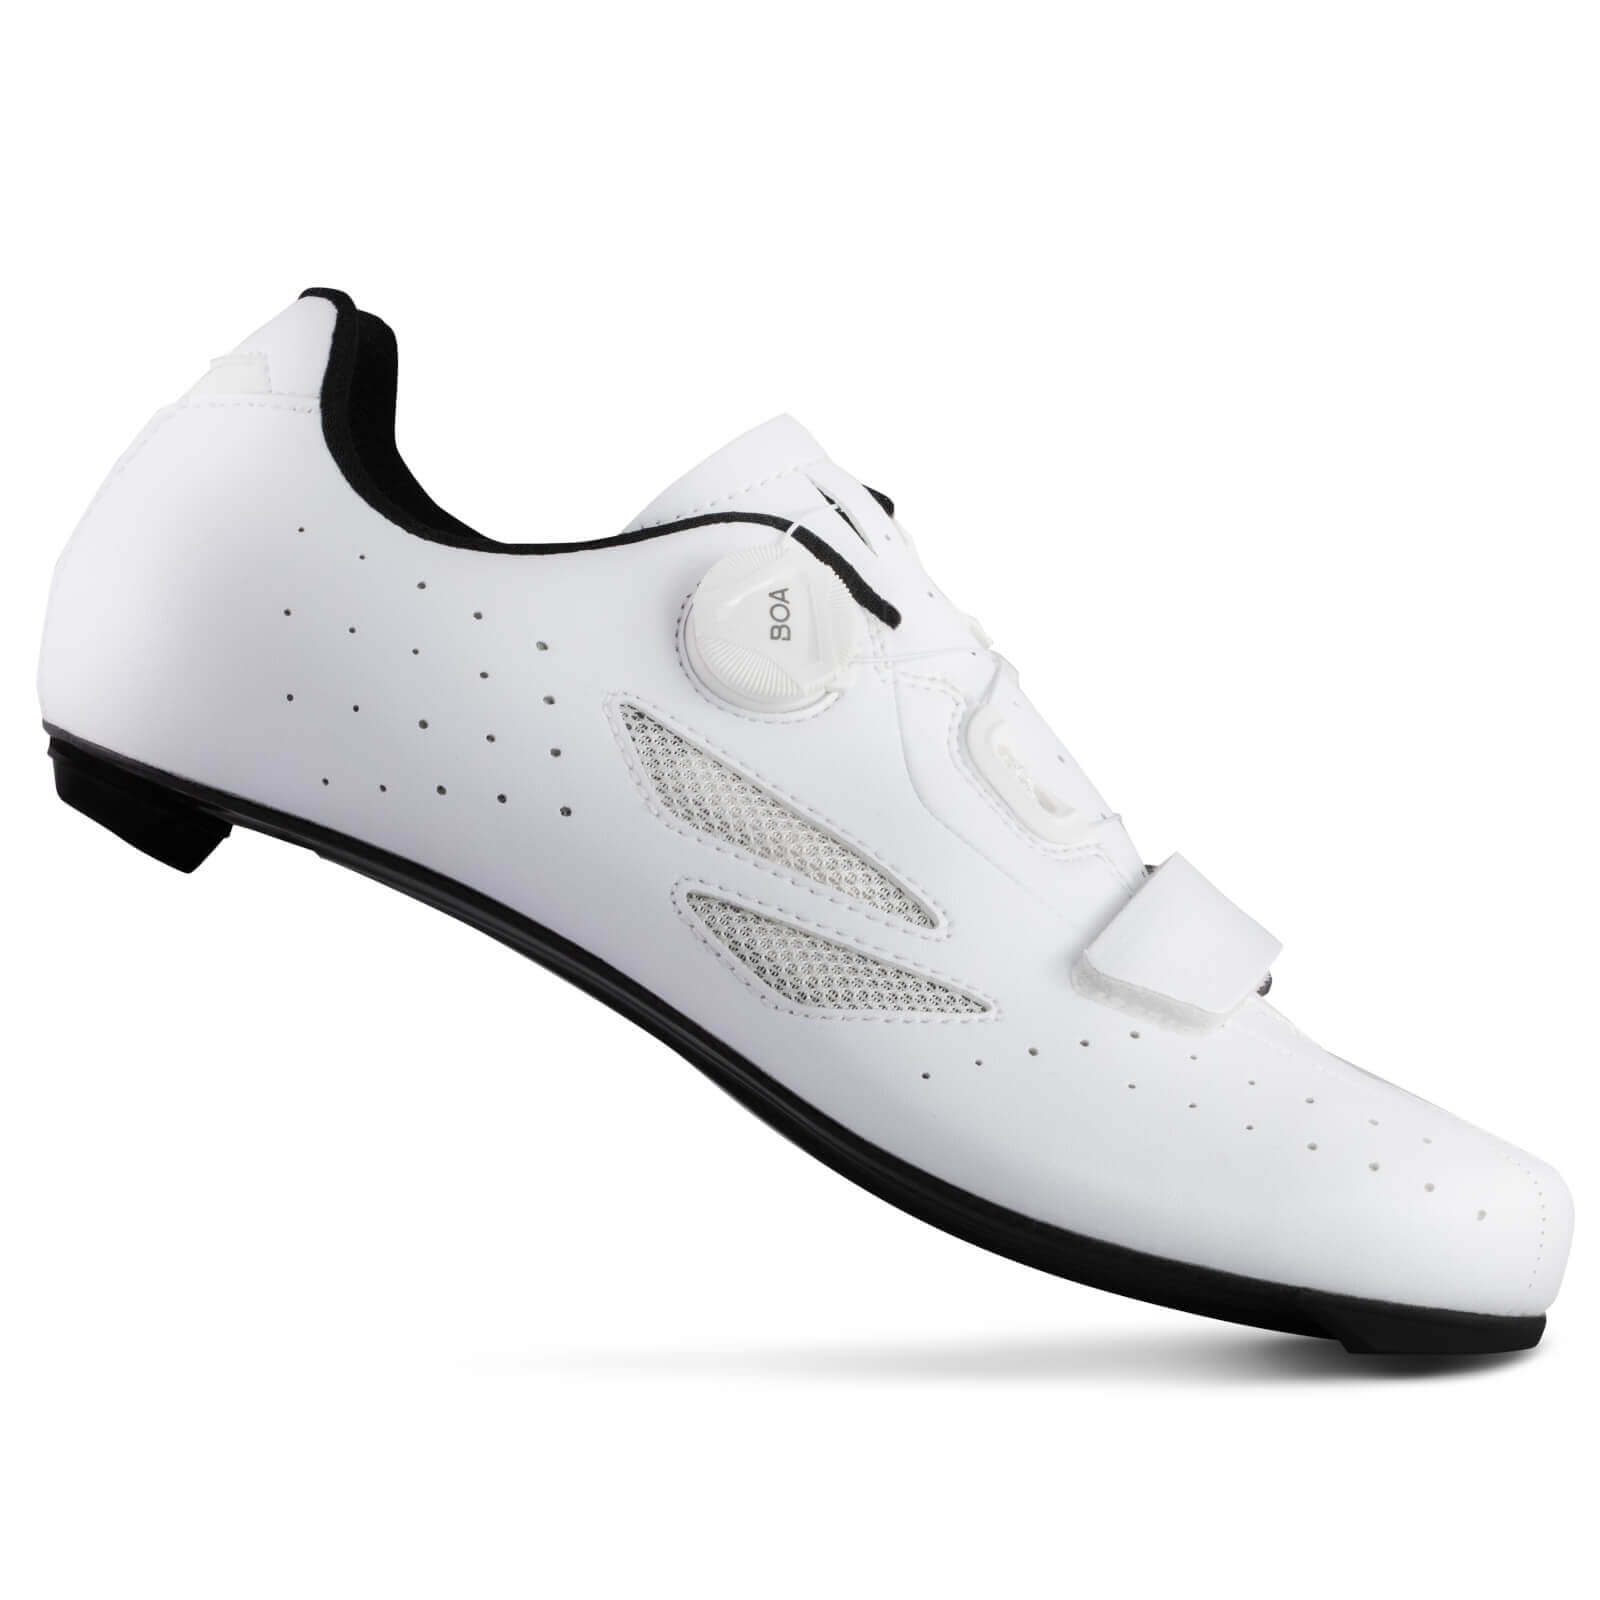 Image of Lake CX218 Carbon Road Shoes - EU 45 - White